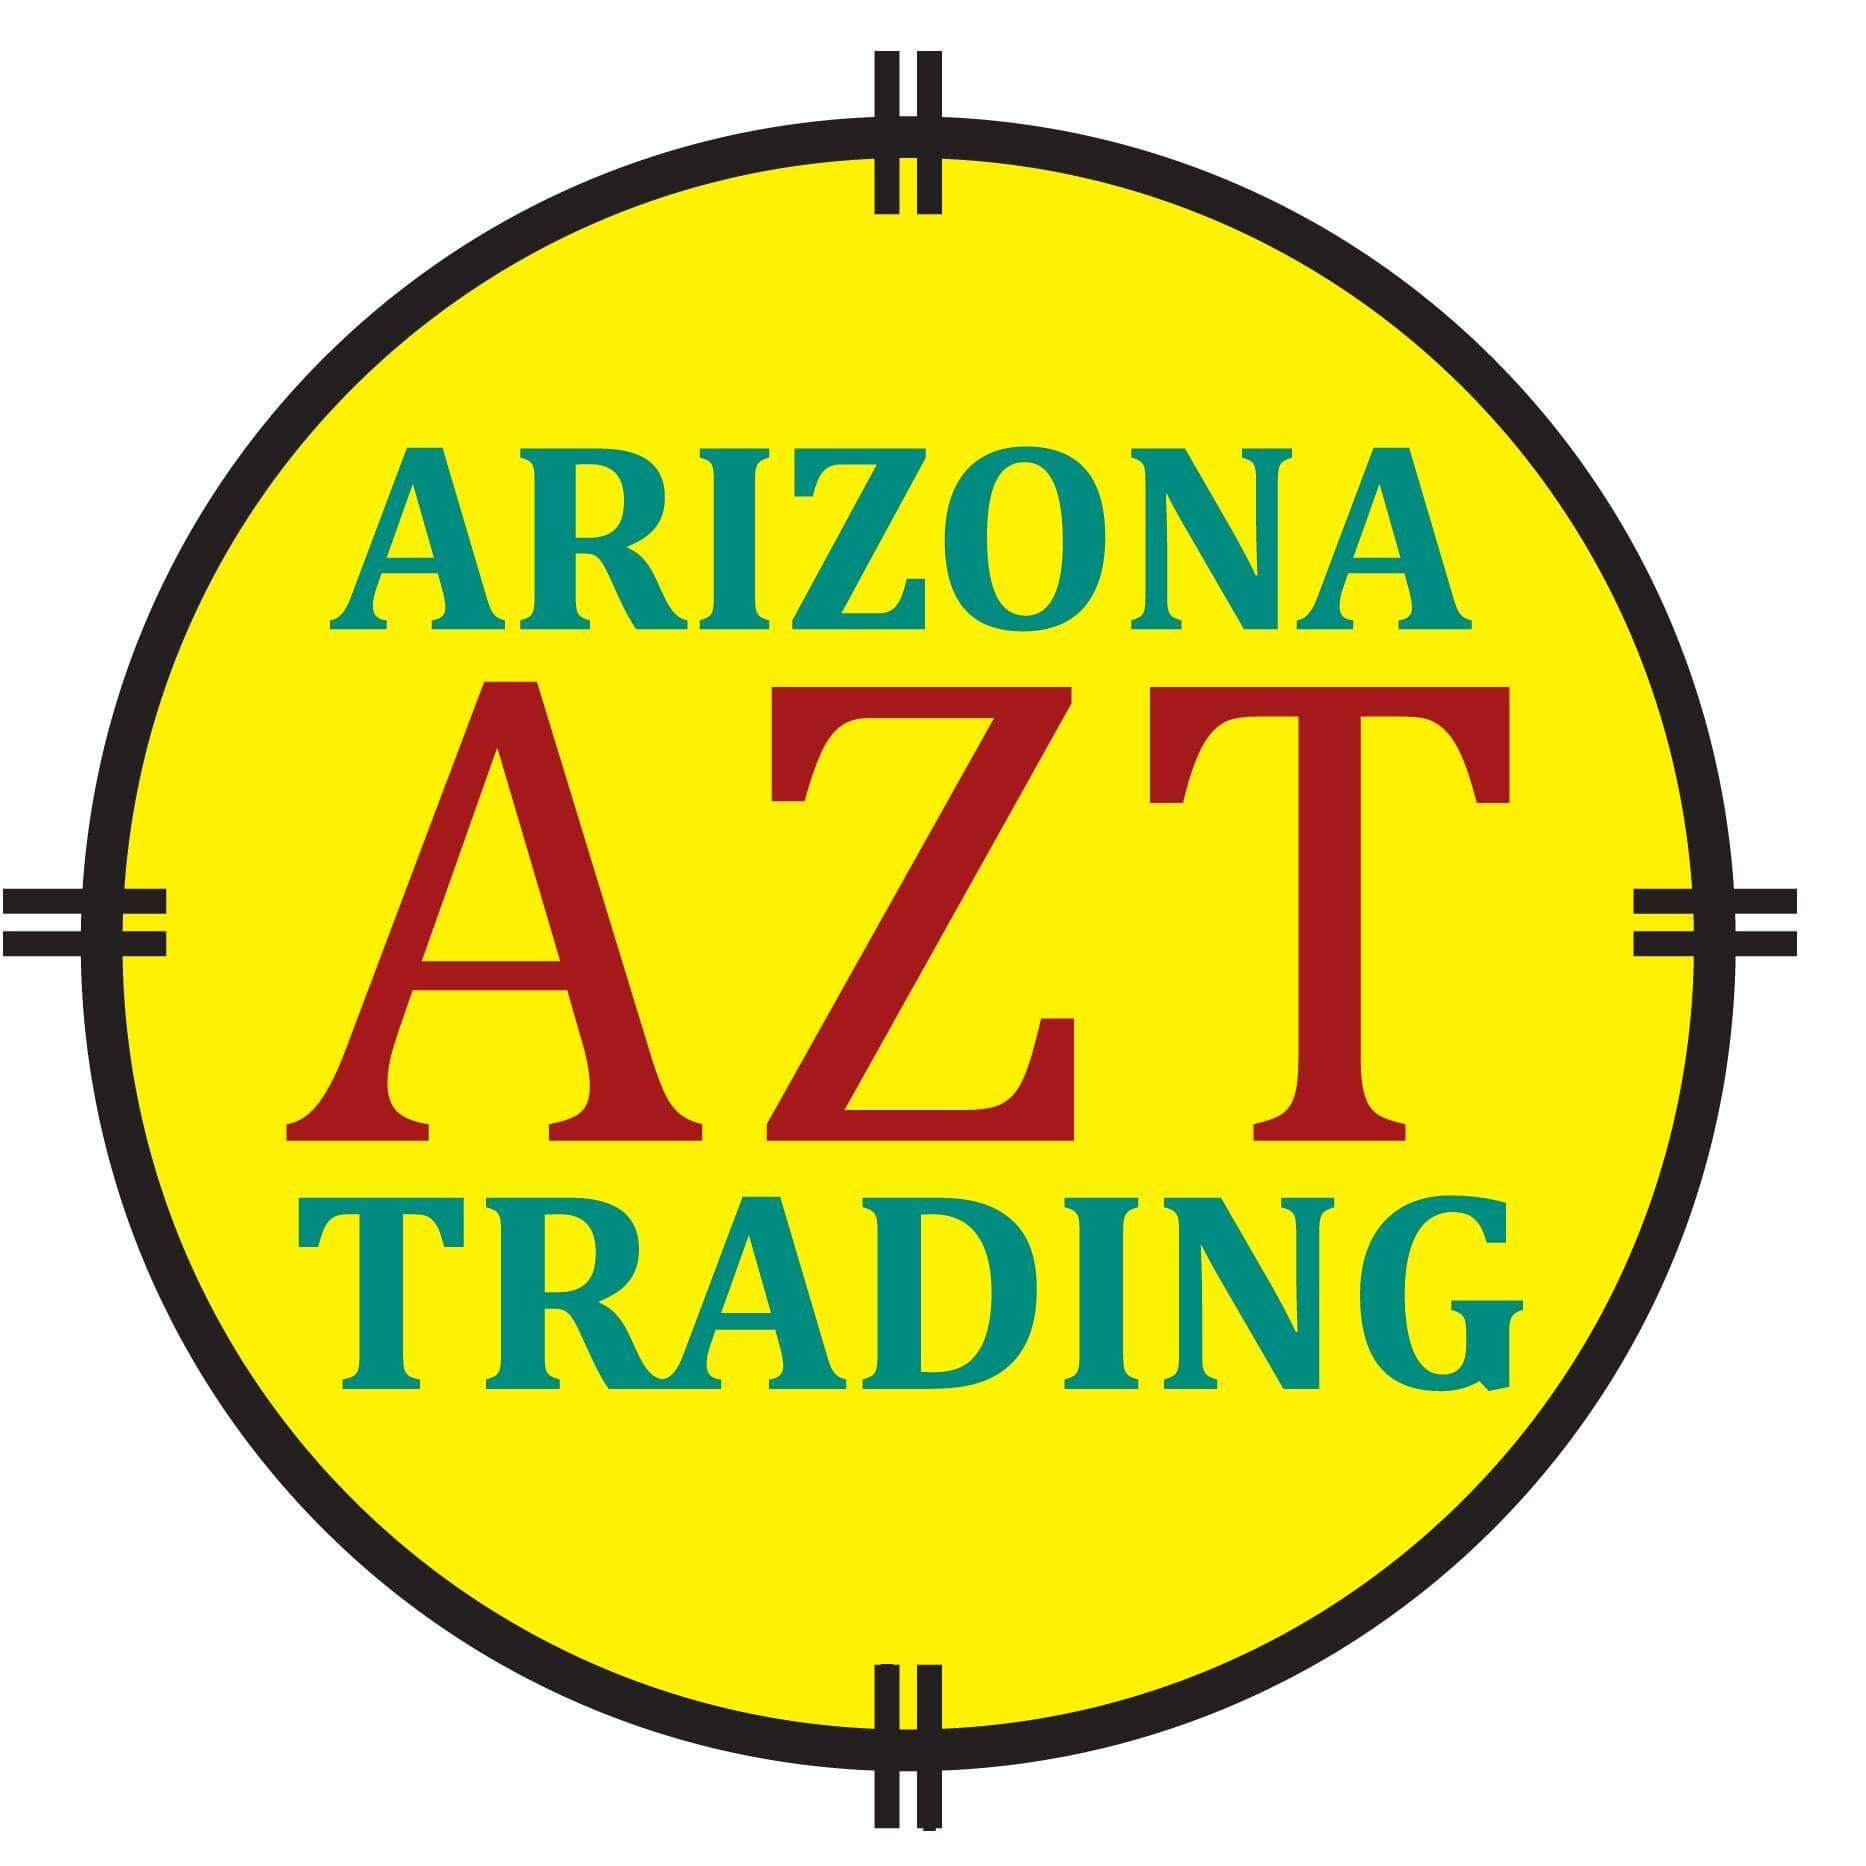 Arizona Trading Post